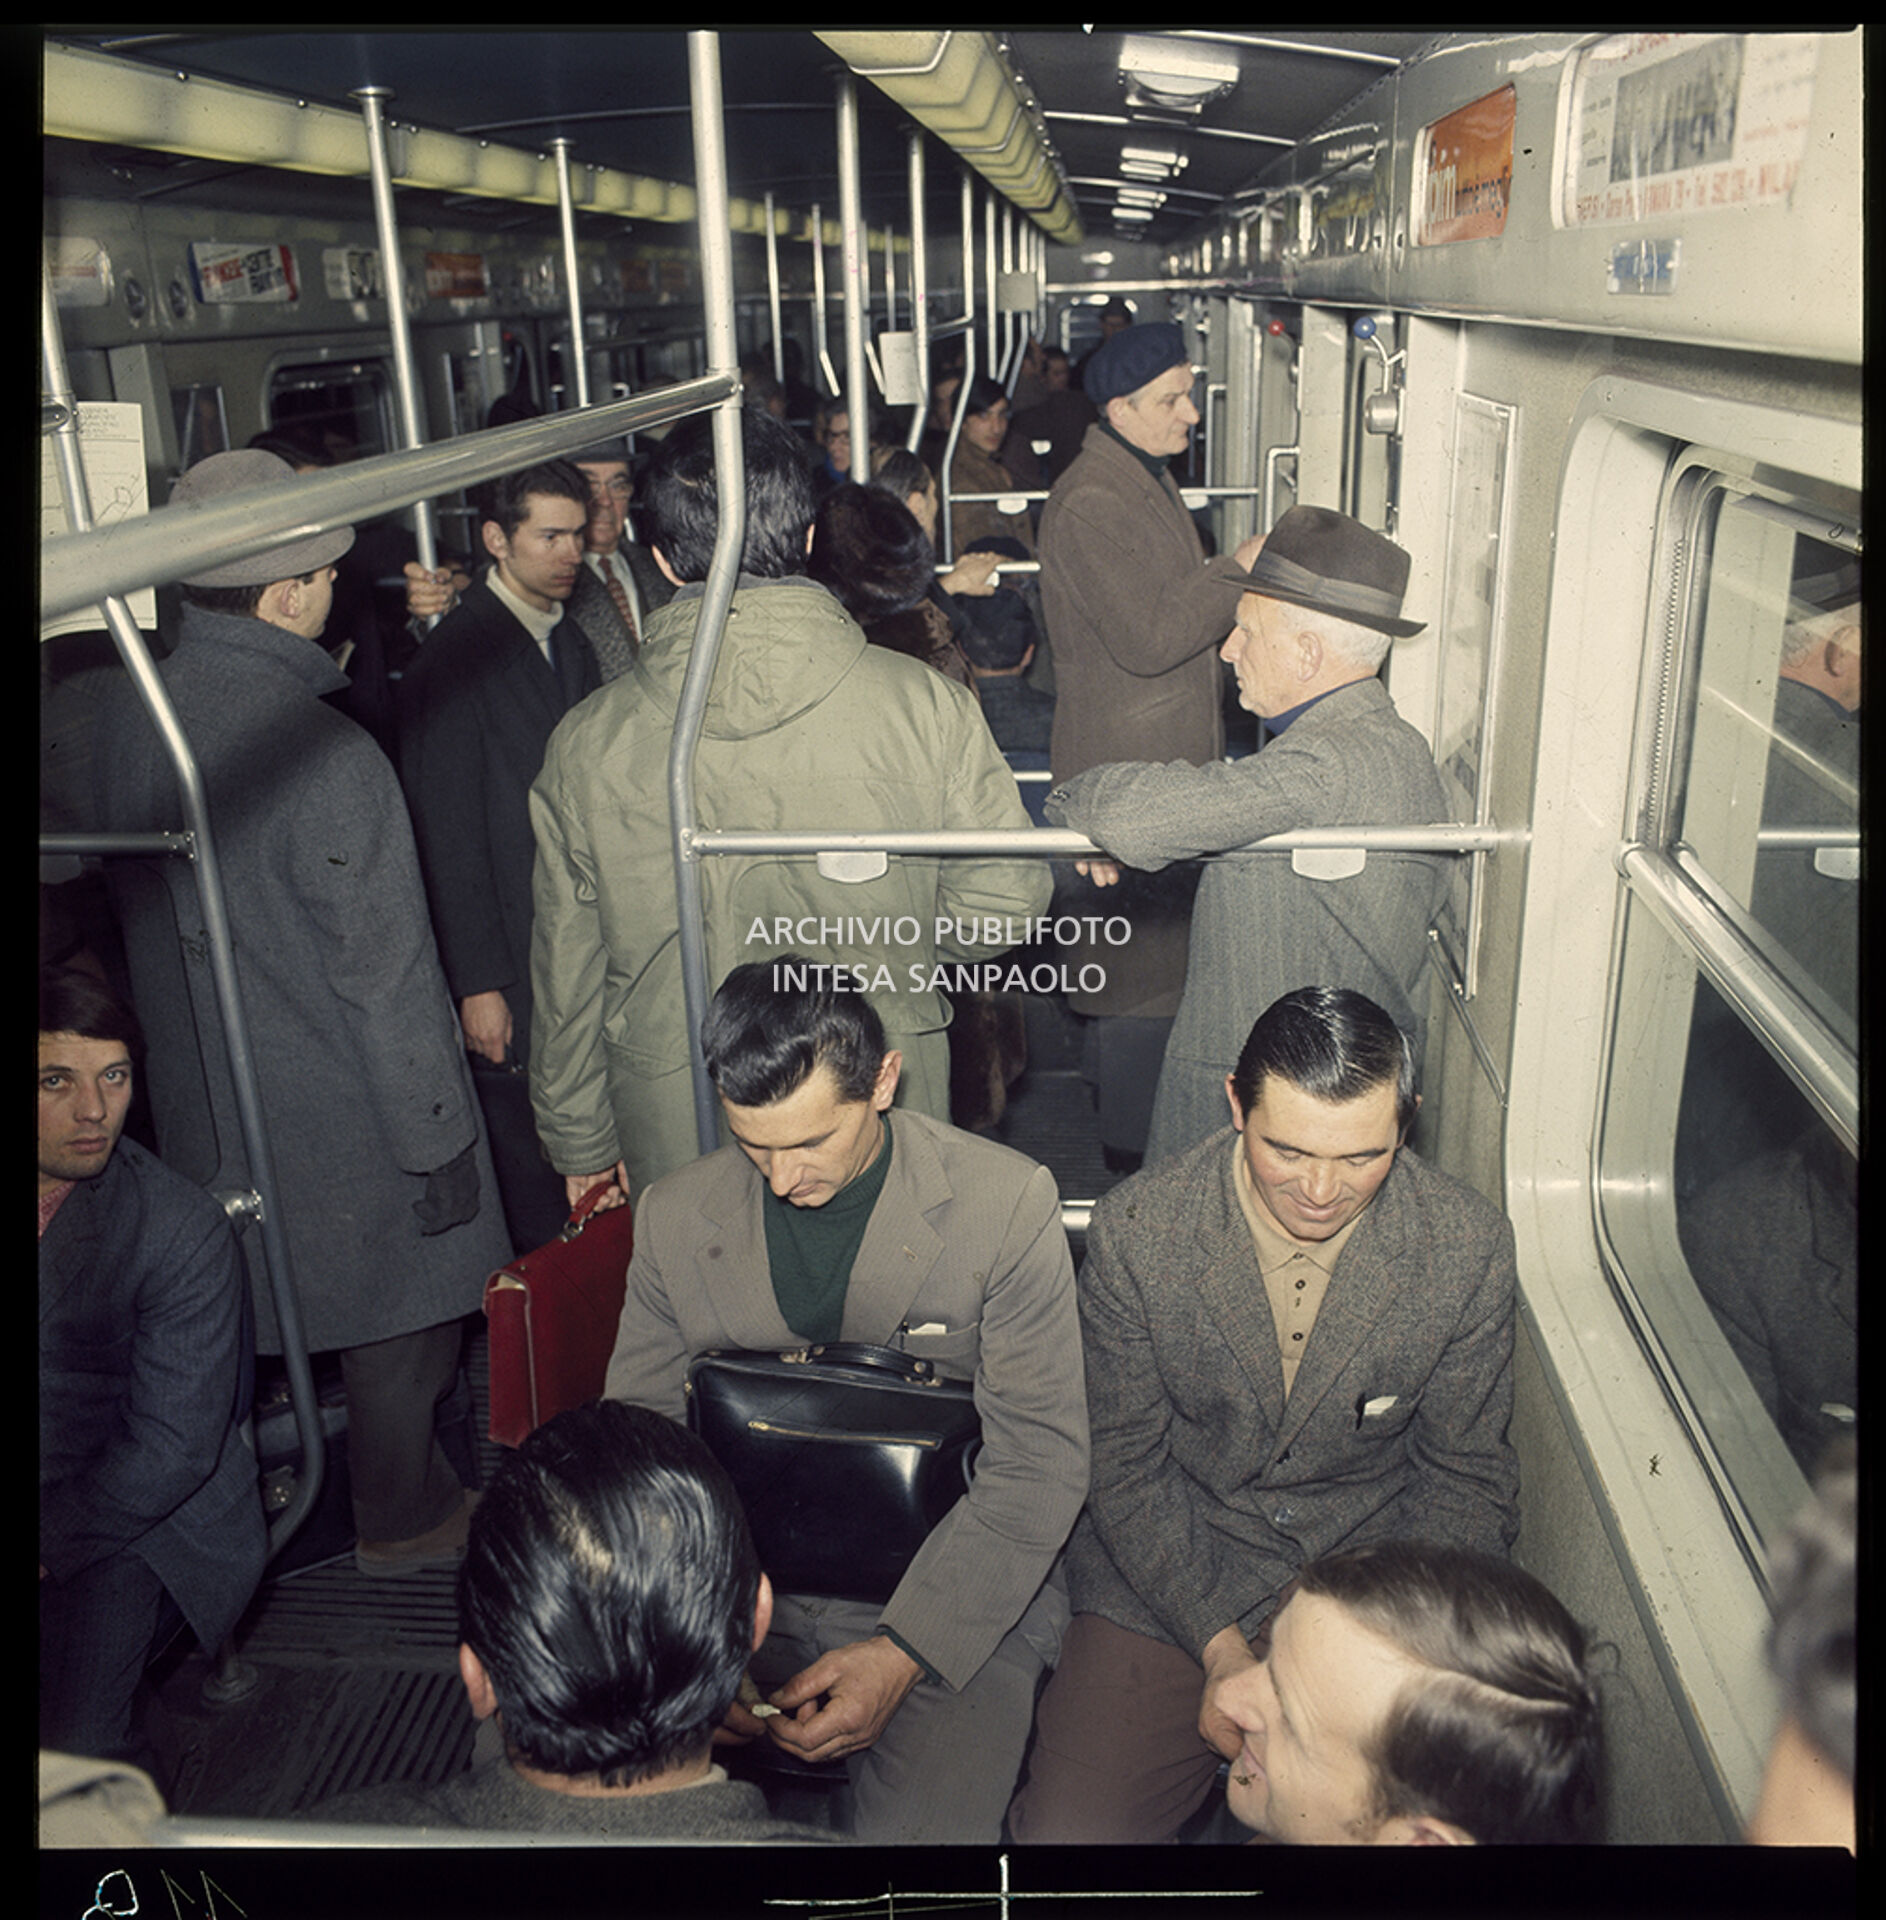 Passengers on the underground train in Milan